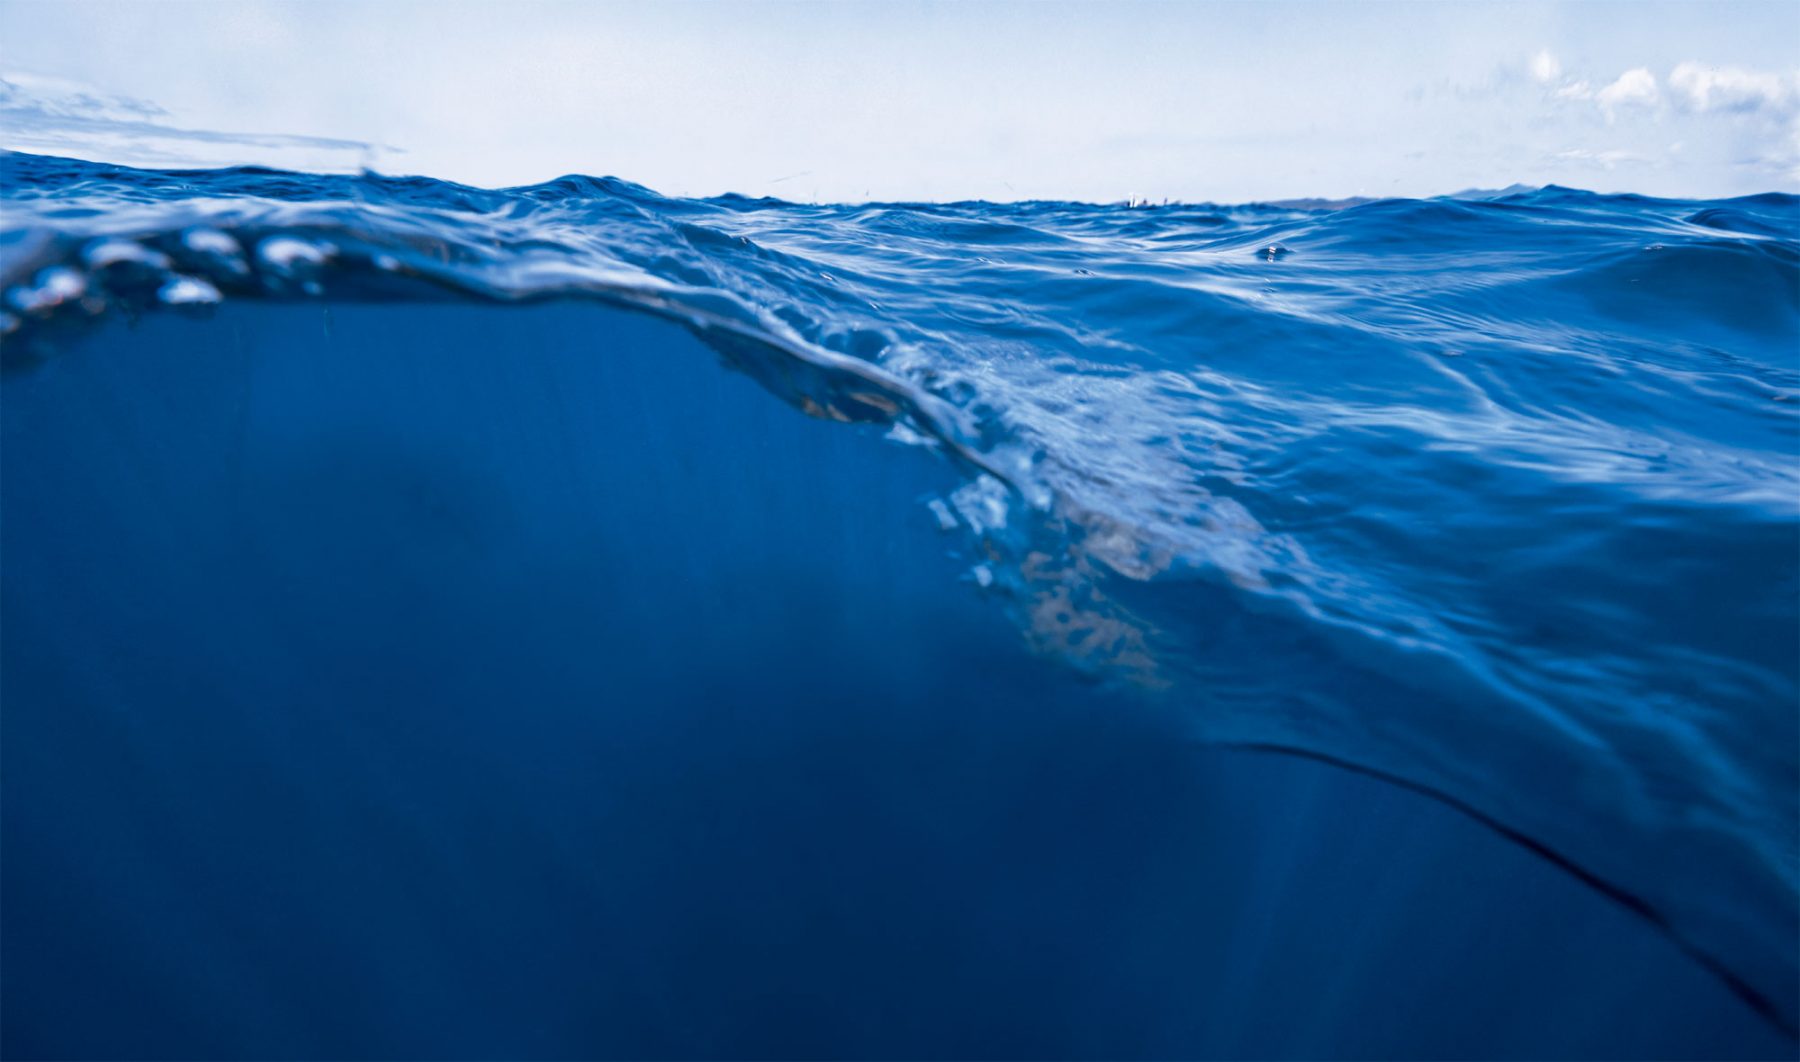 Film couleur bleu océan transparent